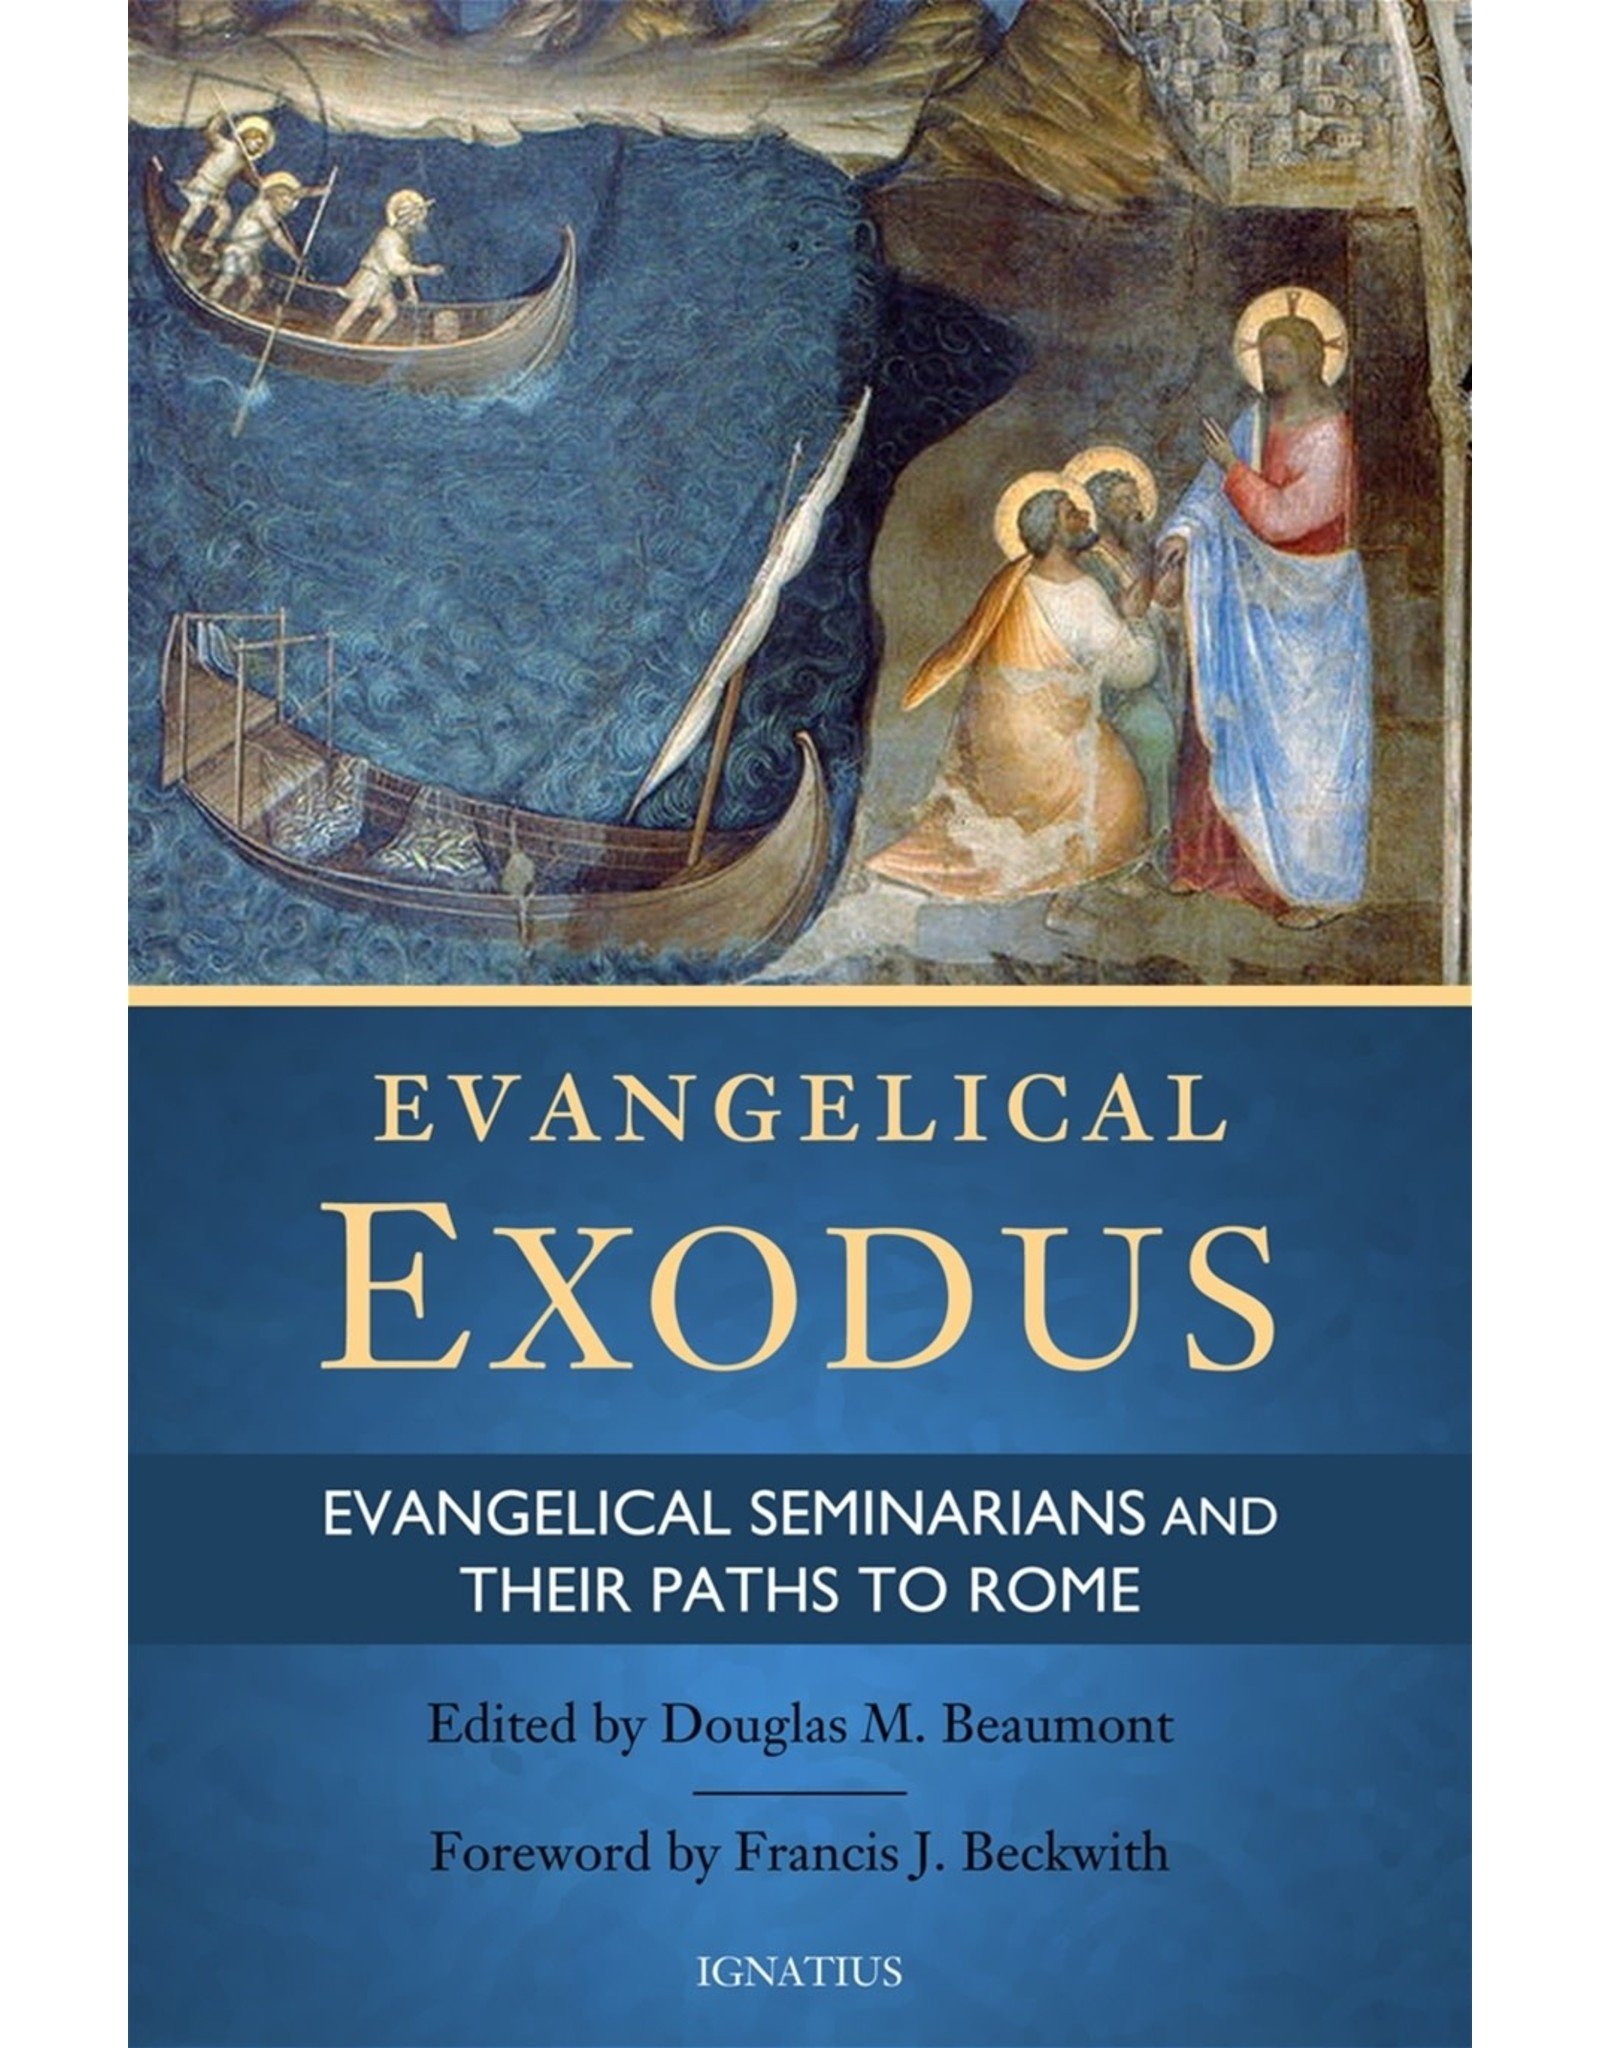 Evangelical Exodus